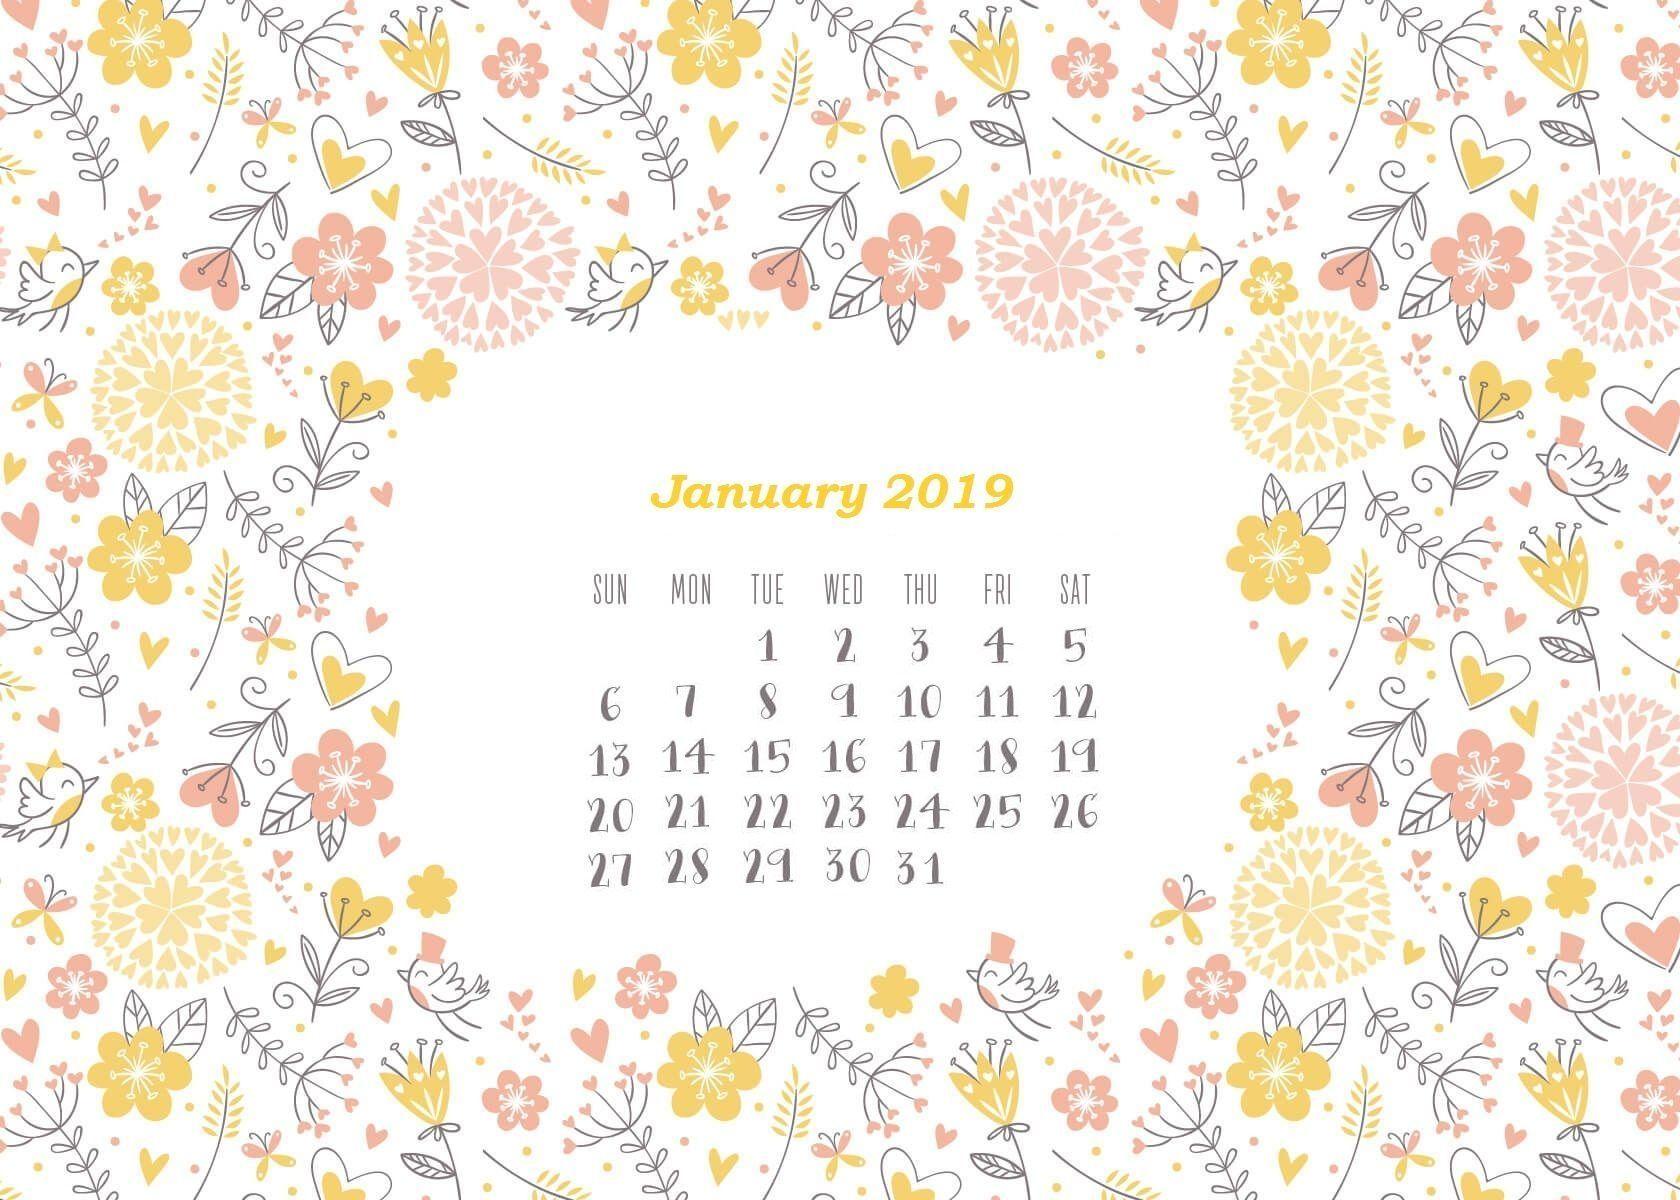 Free January 2019 Calendar Wallpaper. Calendar Format Example